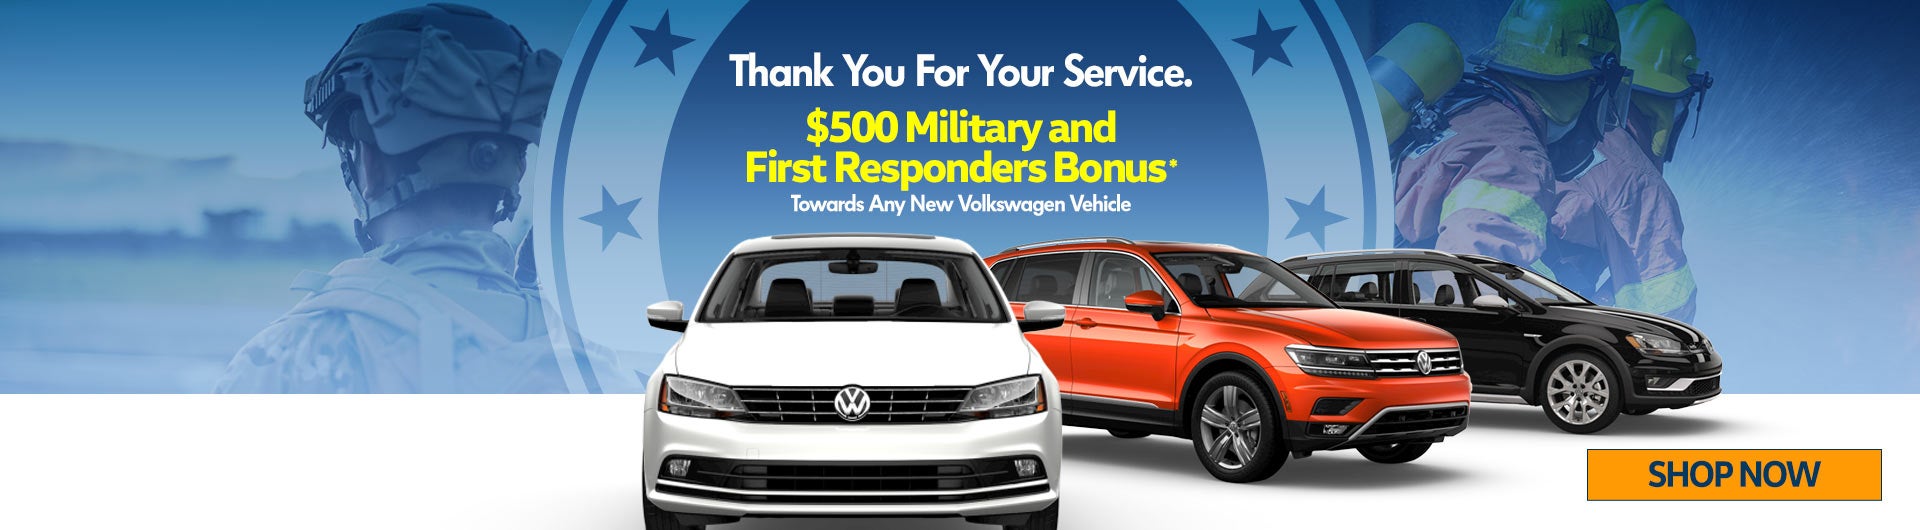 Military & First Responders Bonus*